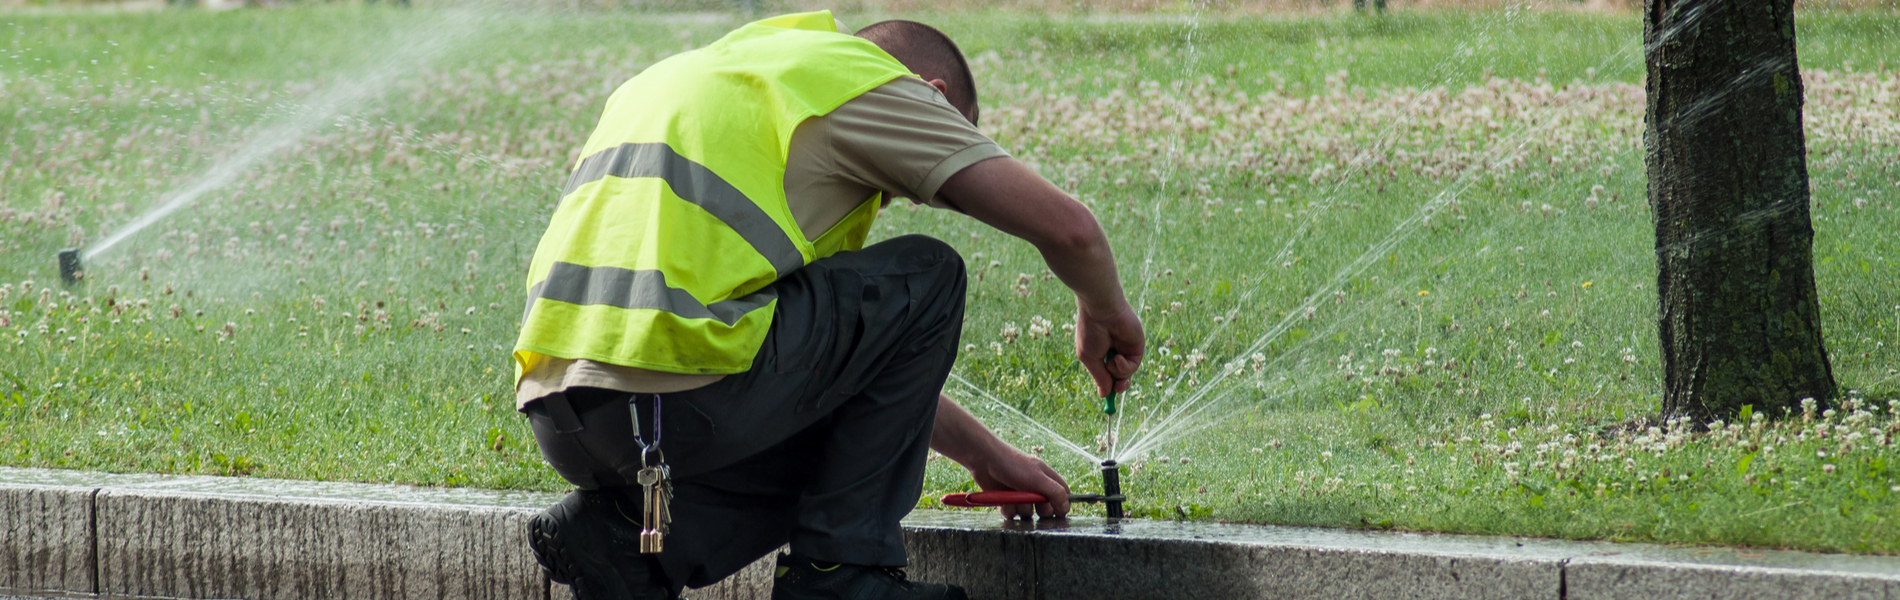 Sprinkler System Installation Crystal Lake Park, MO | Crystal Lake Park, MO area lawn care | Lawn Sprinklers of St. Louis